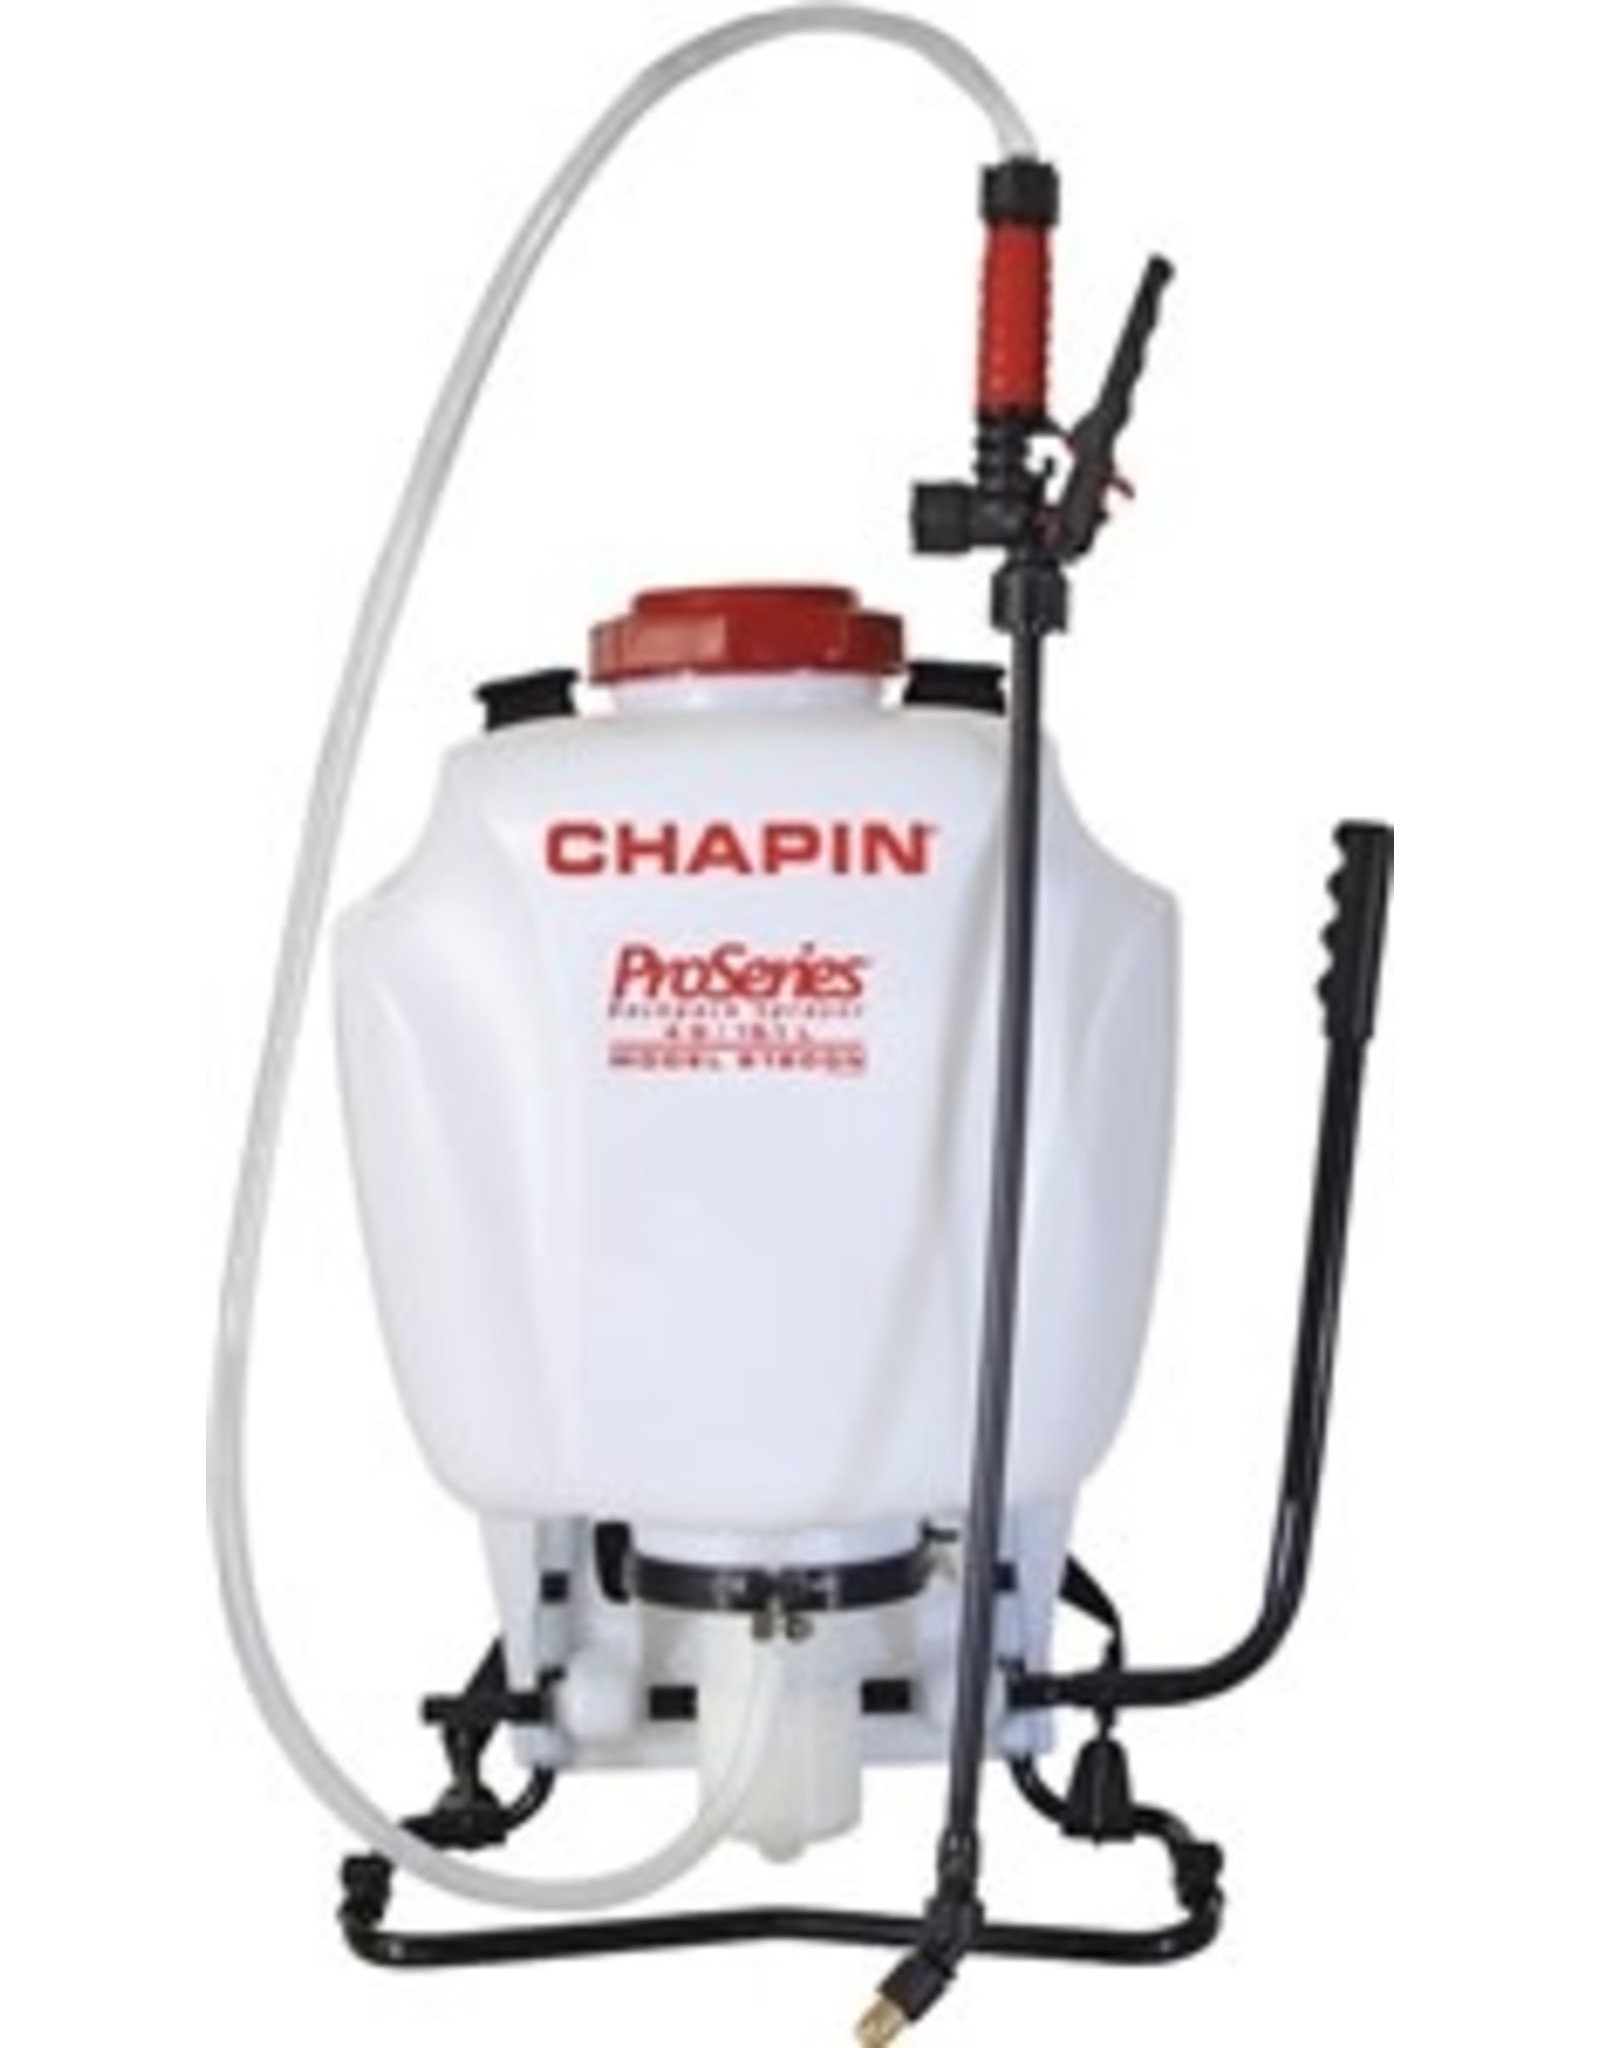 Chapin Mfg CHAPIN Pro Series 61800 Backpack Sprayer, 4 gal Tank, Poly Tank, 25 ft Horizontal, 23 ft Vertical Spray Range*